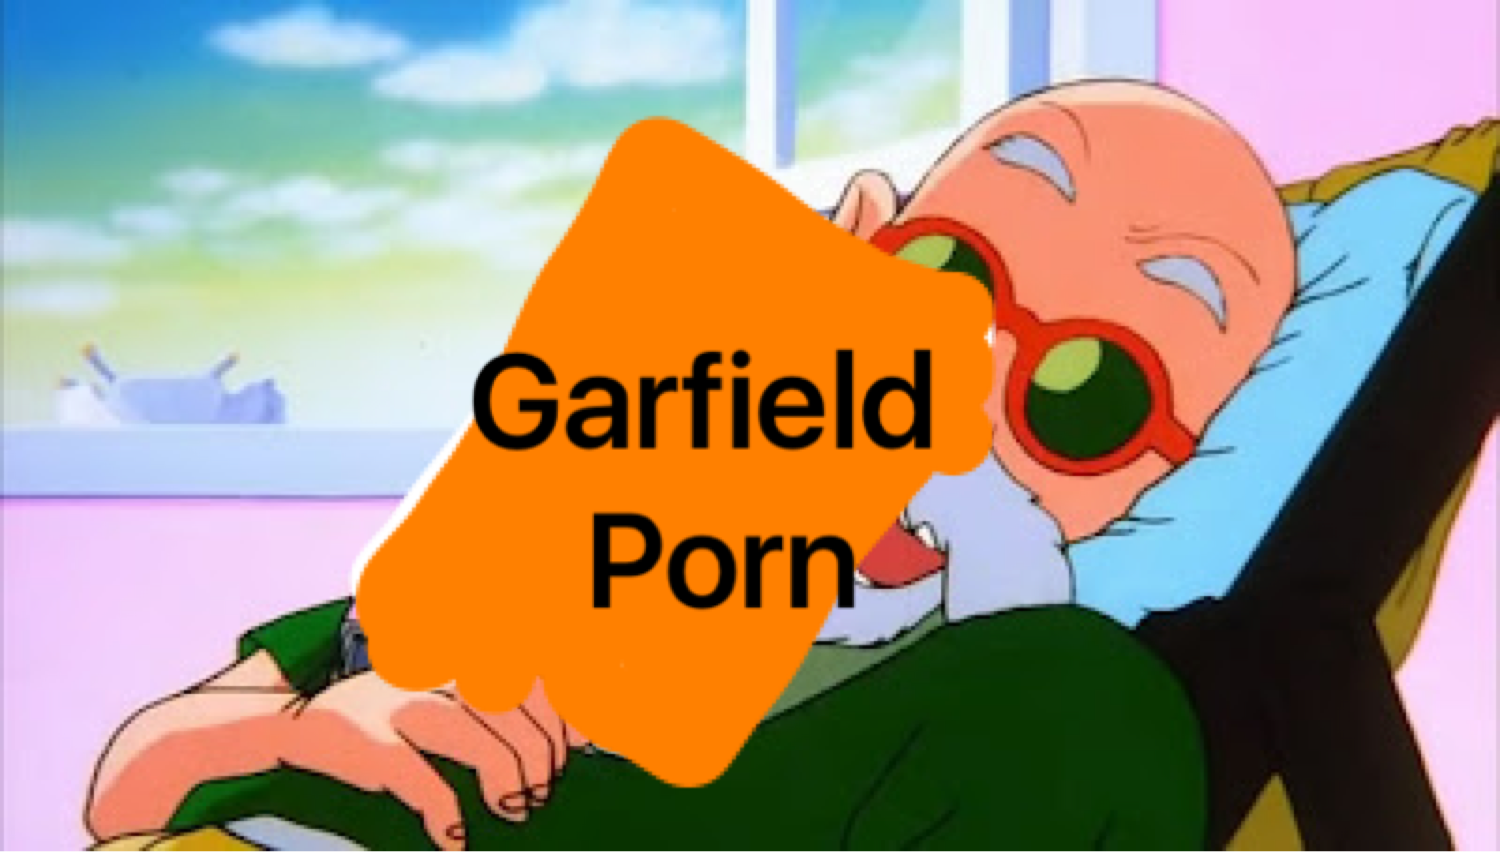 grafield porn - Garfield Porn comics, Cartoon porn comics ...